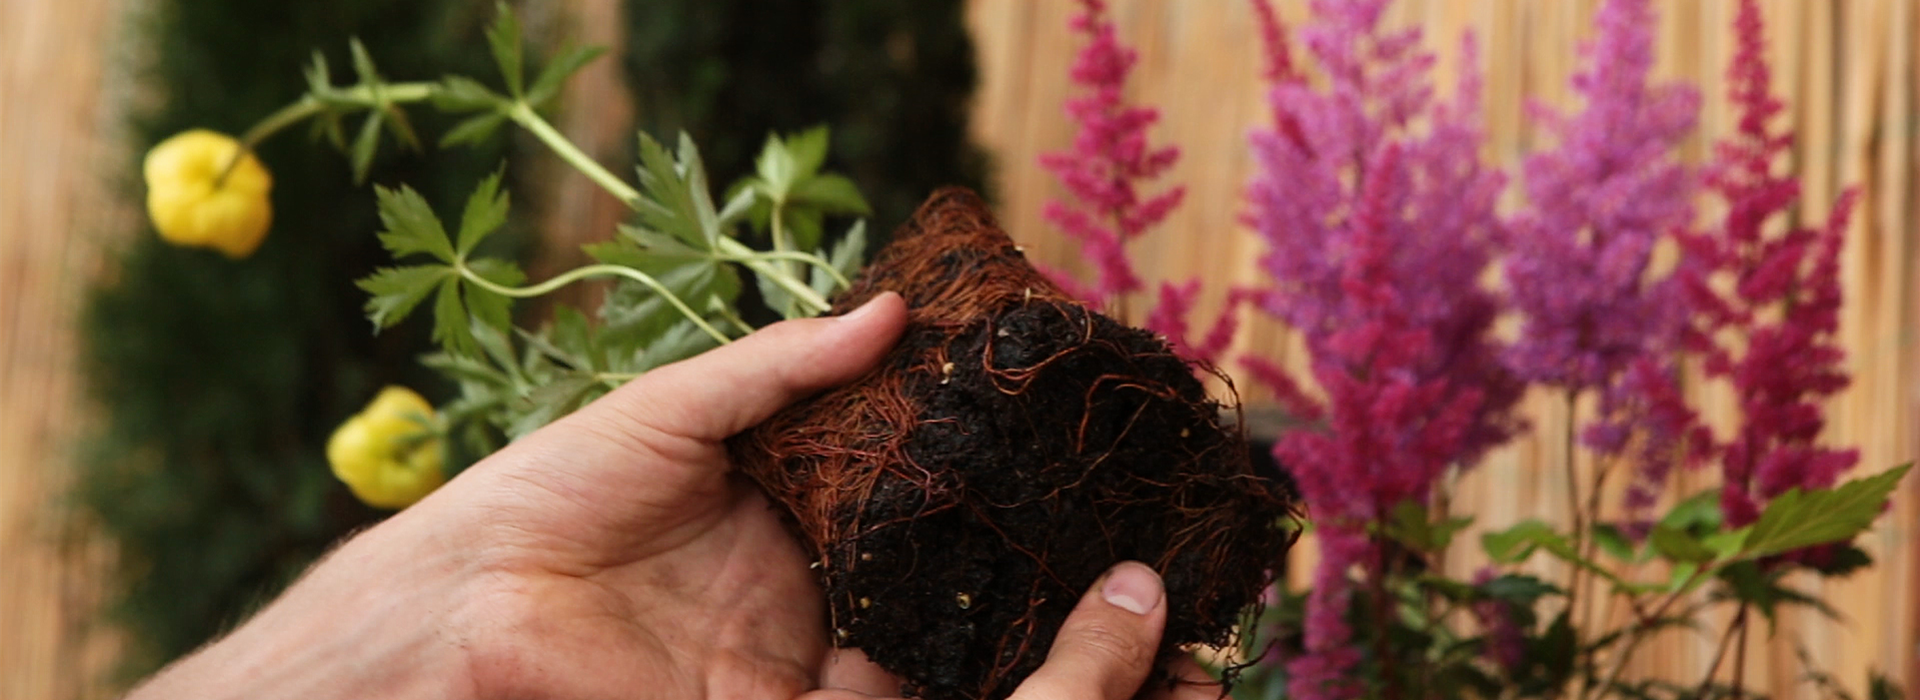 Trollblume - Einpflanzen ins Beet (Thumbnail)0